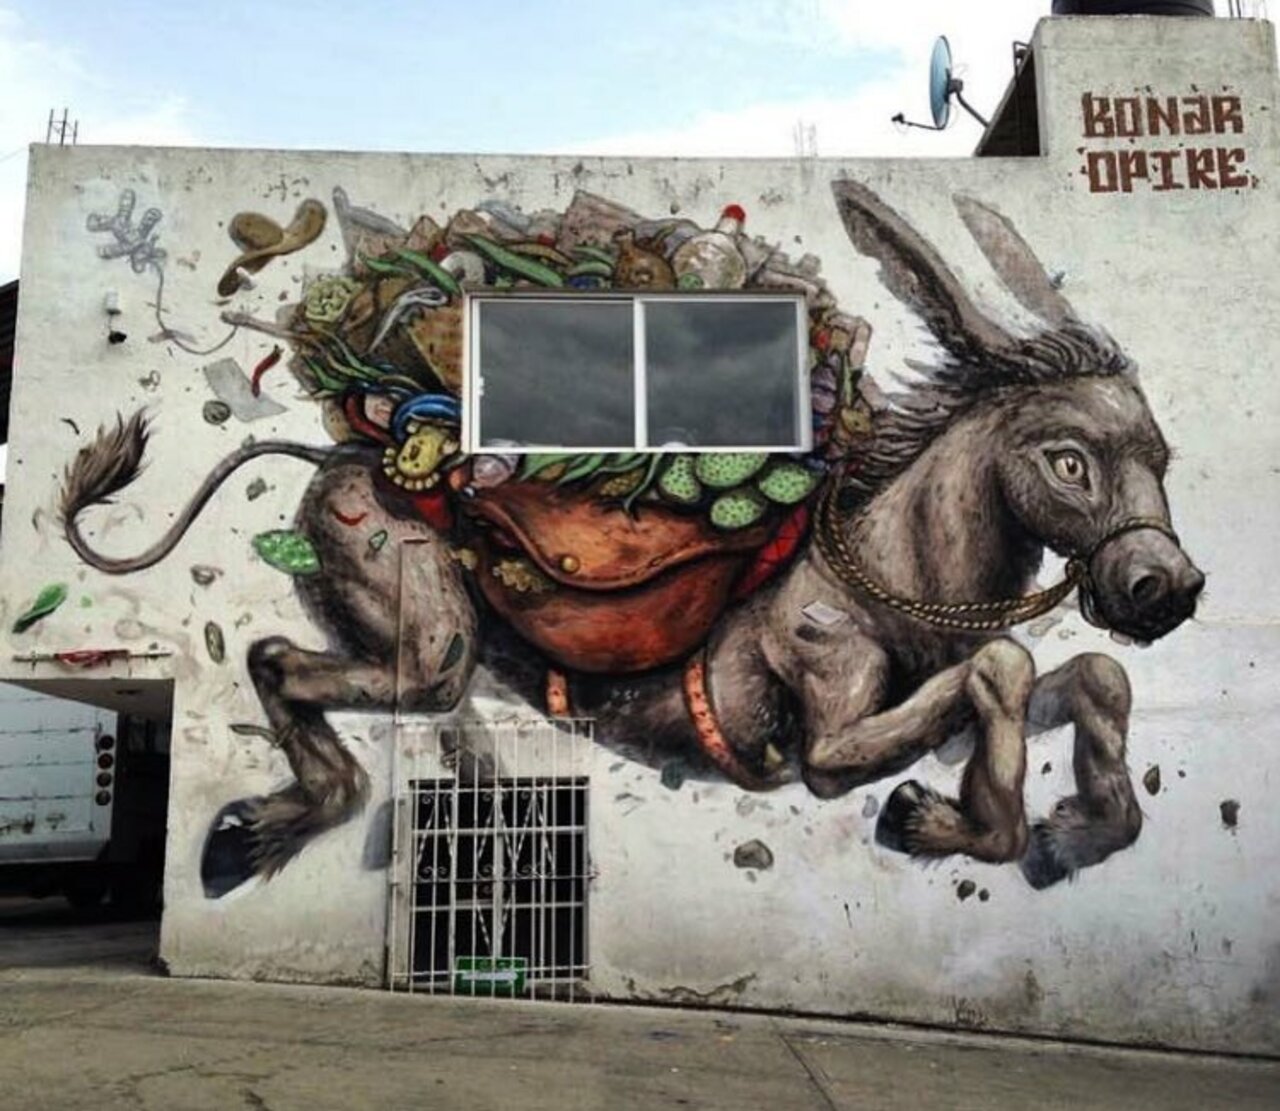 New Street Art collaboration by Lebonar & Opire203 Mexico #art #mural #graffiti #streetart https://t.co/02N6R9nJkB